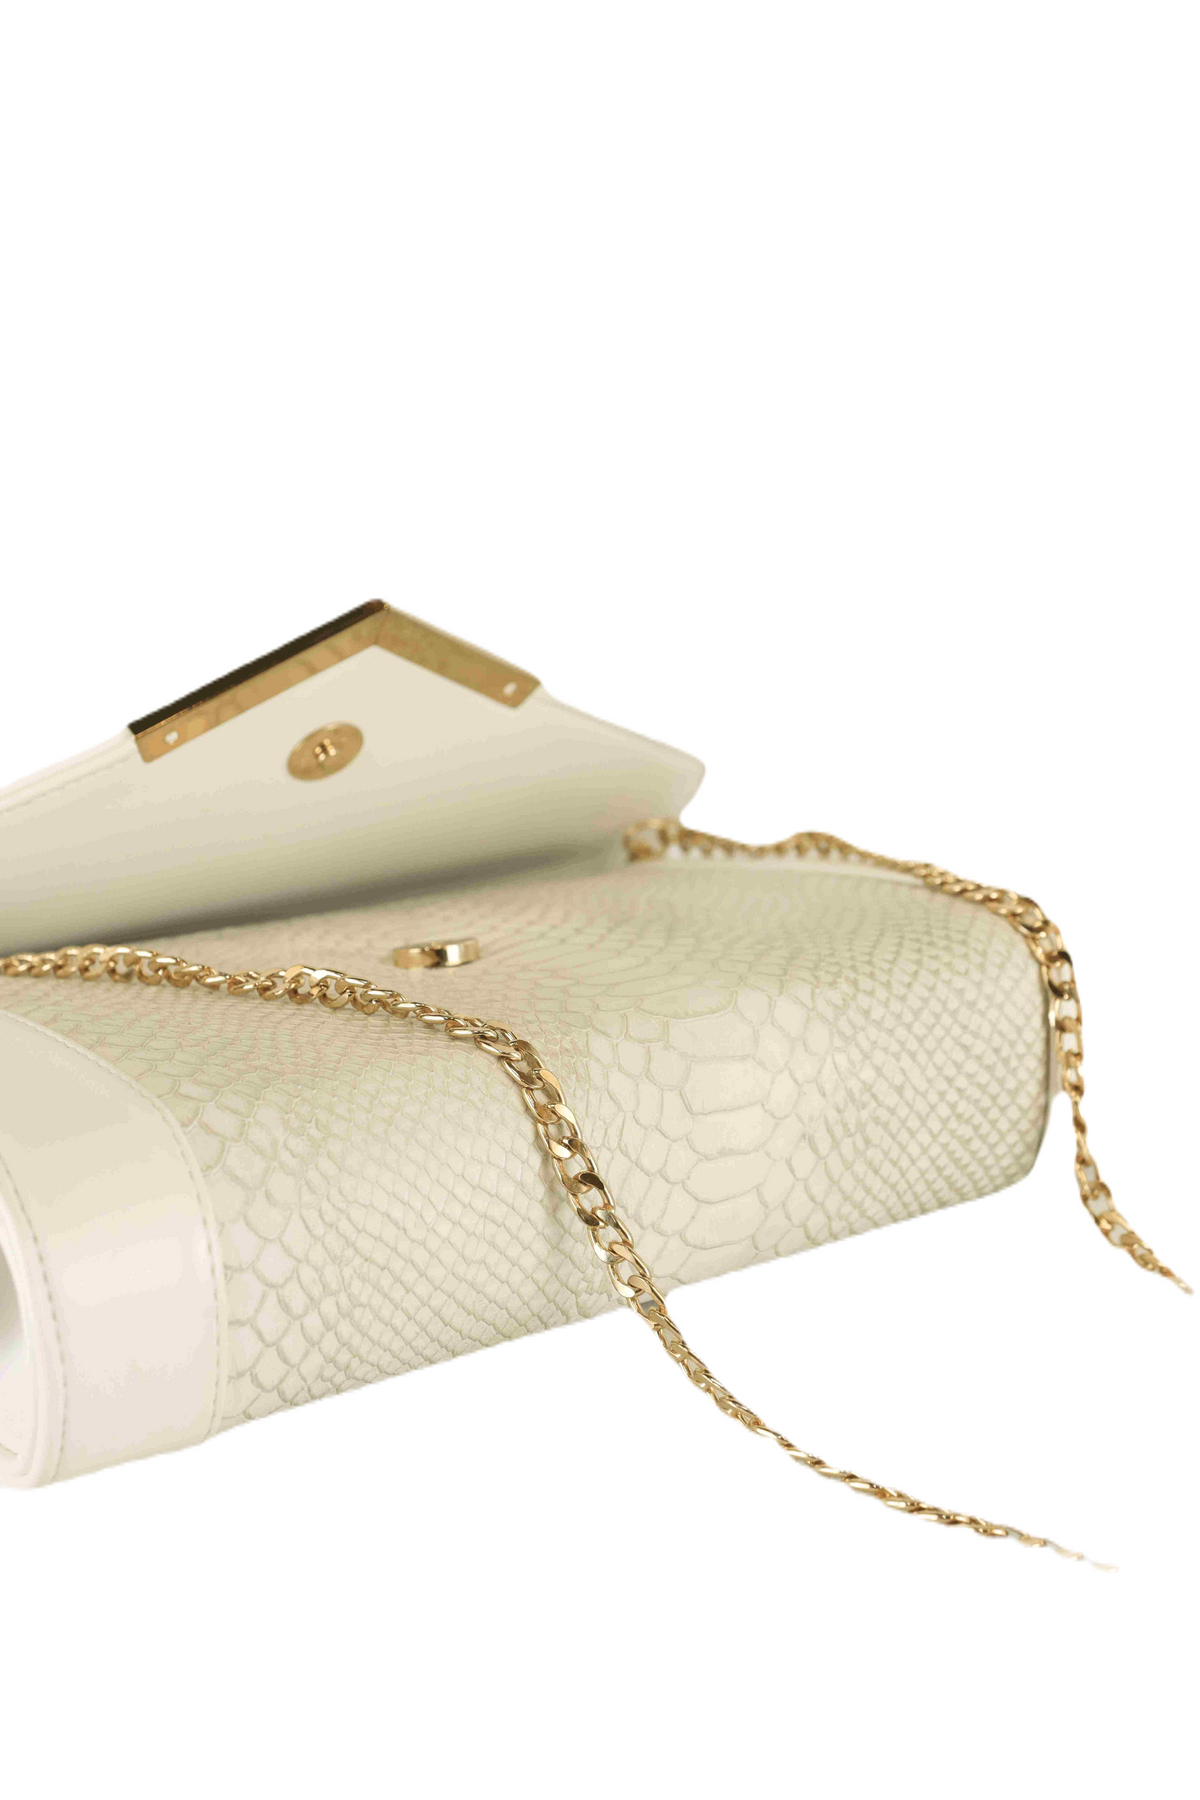 Betts Ivory and Croc Print Shoulder Bag